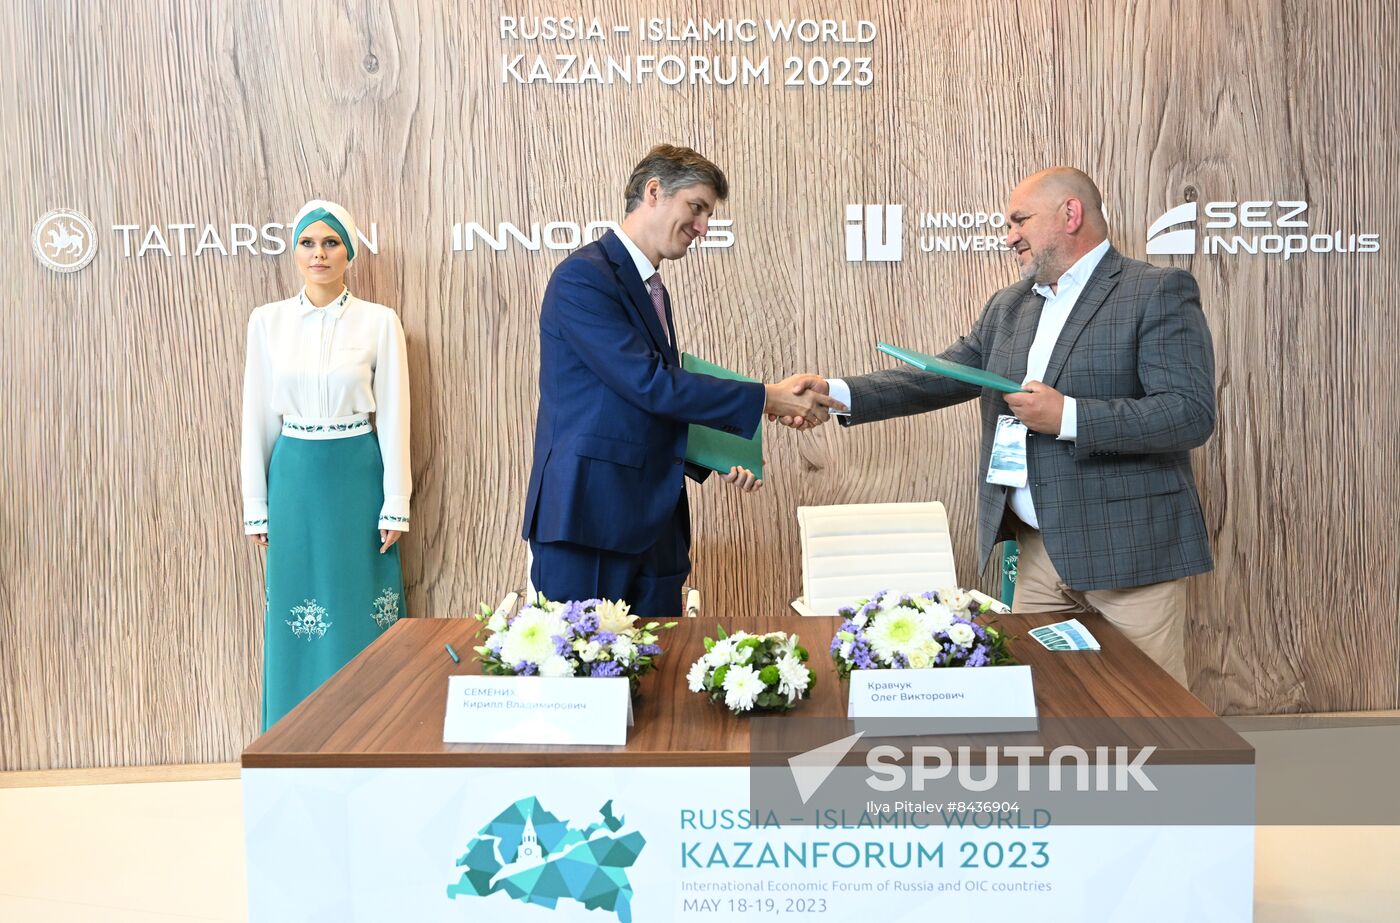 KAZANFORUM 2023. Signing ceremonies